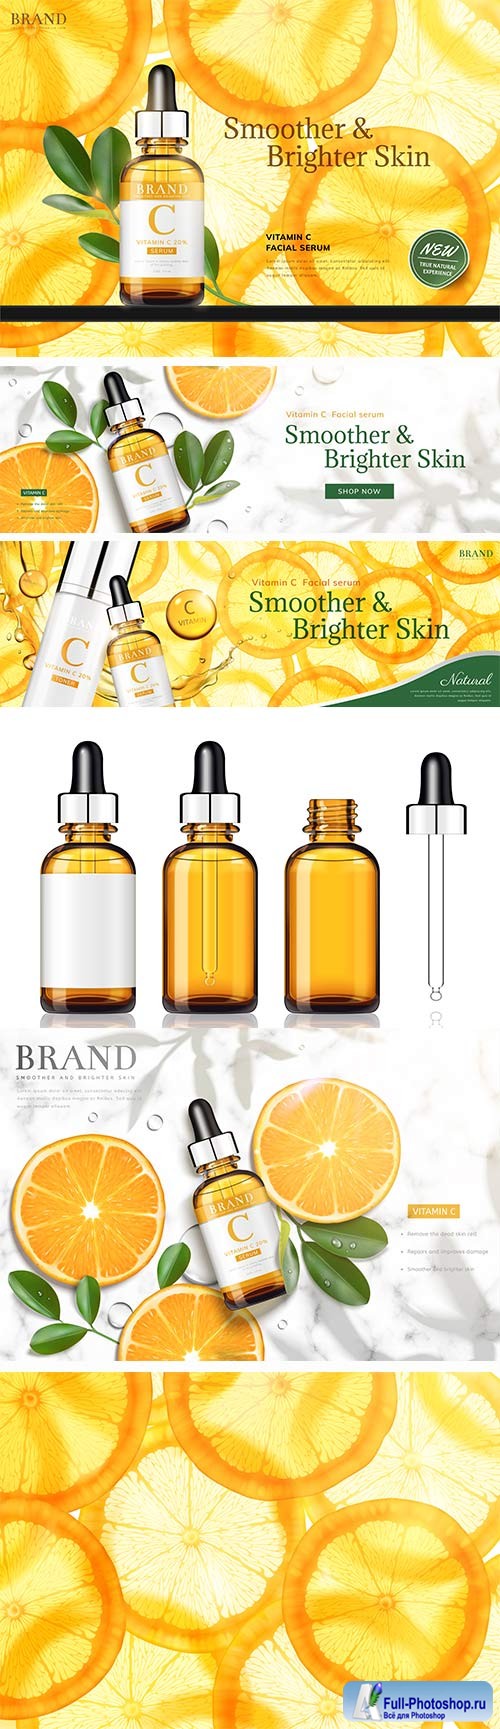 Vitamin C essence banner ads 3d vector illustration